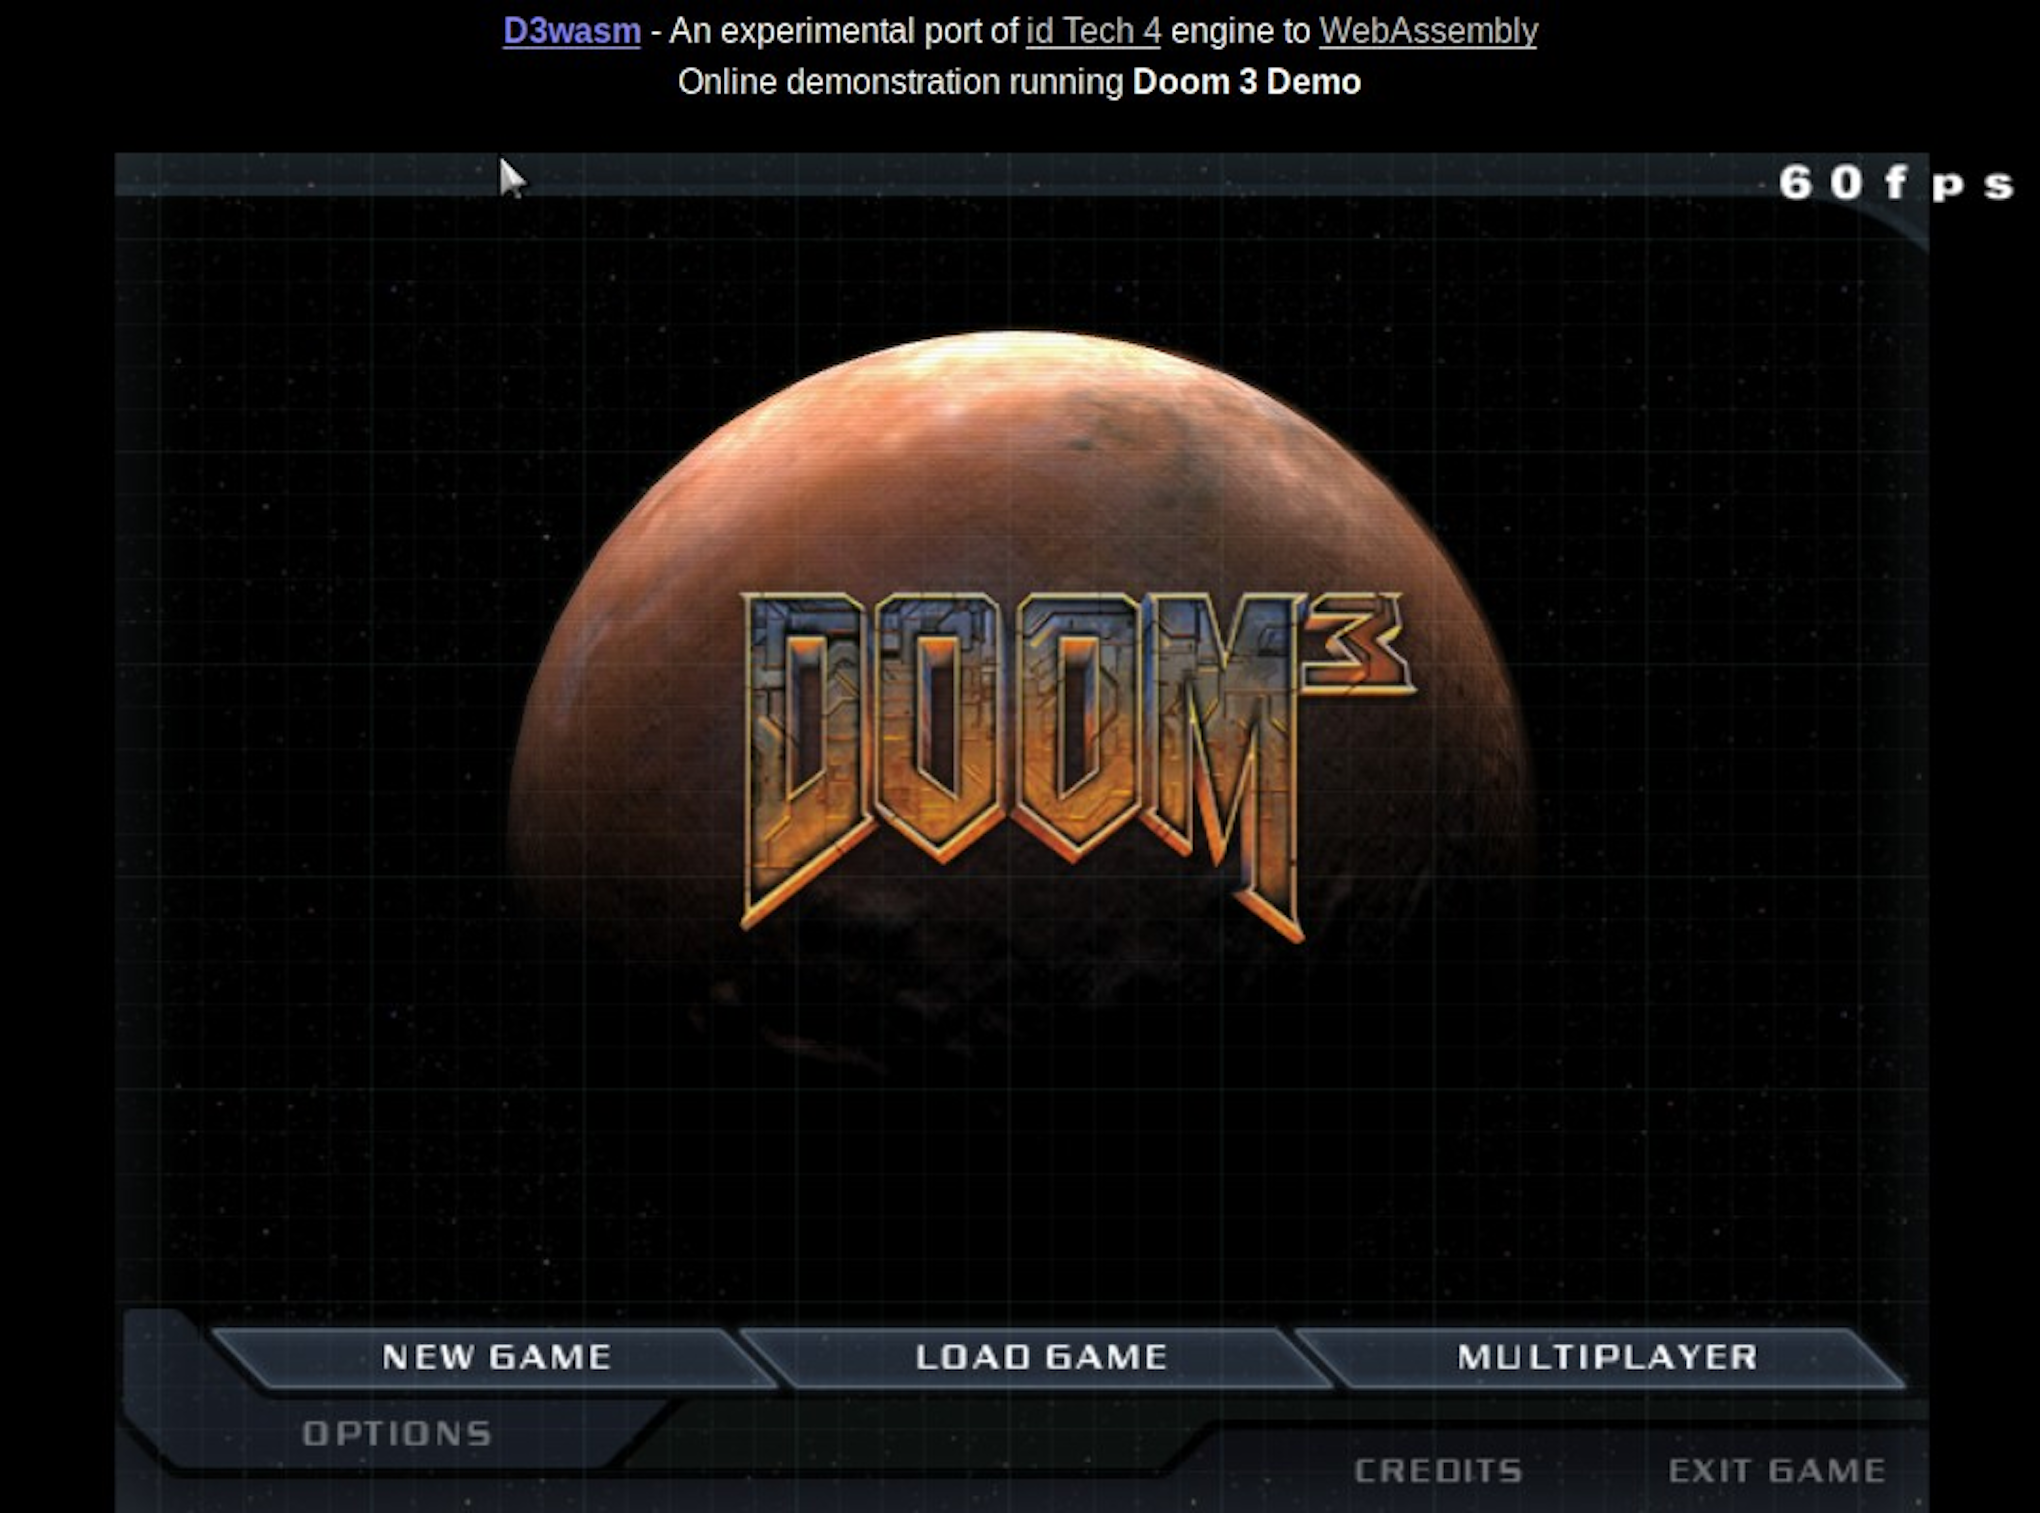 Online demonstration of Doom 3 in the web